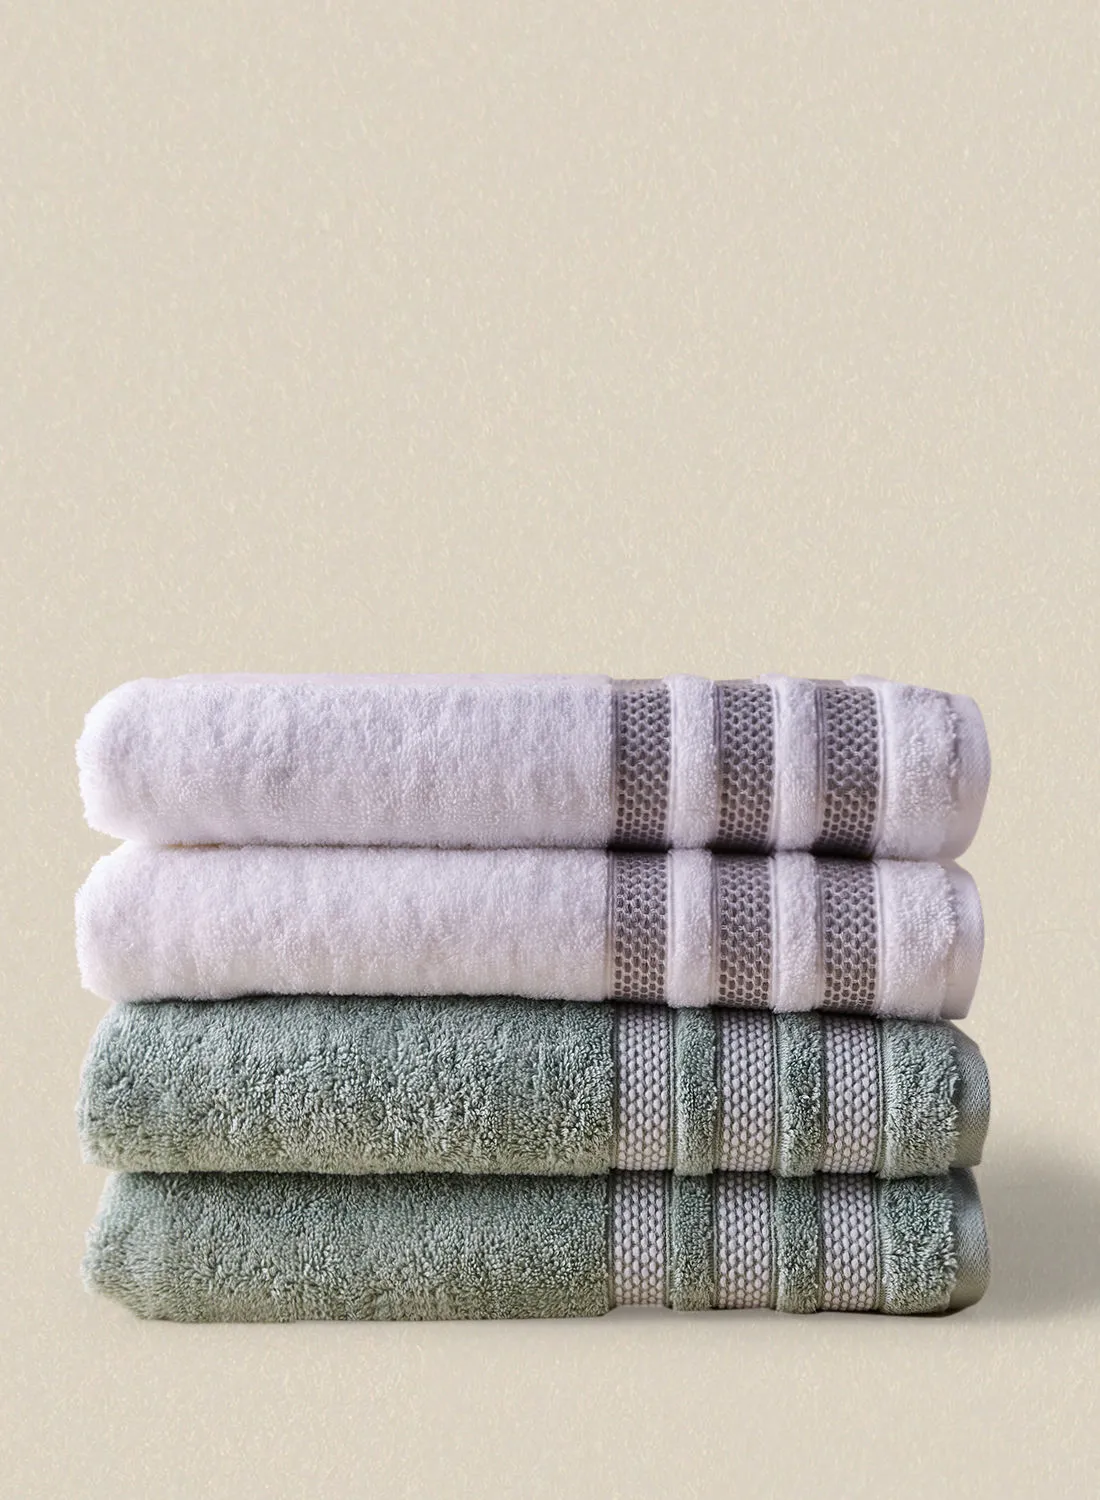 noon east 4 Piece Bathroom Towel Set - 500 GSM 100% Cotton Low Twist - 4 Bath Towel - Multicolor White/Aqua Color - Highly Absorbent - Fast Dry